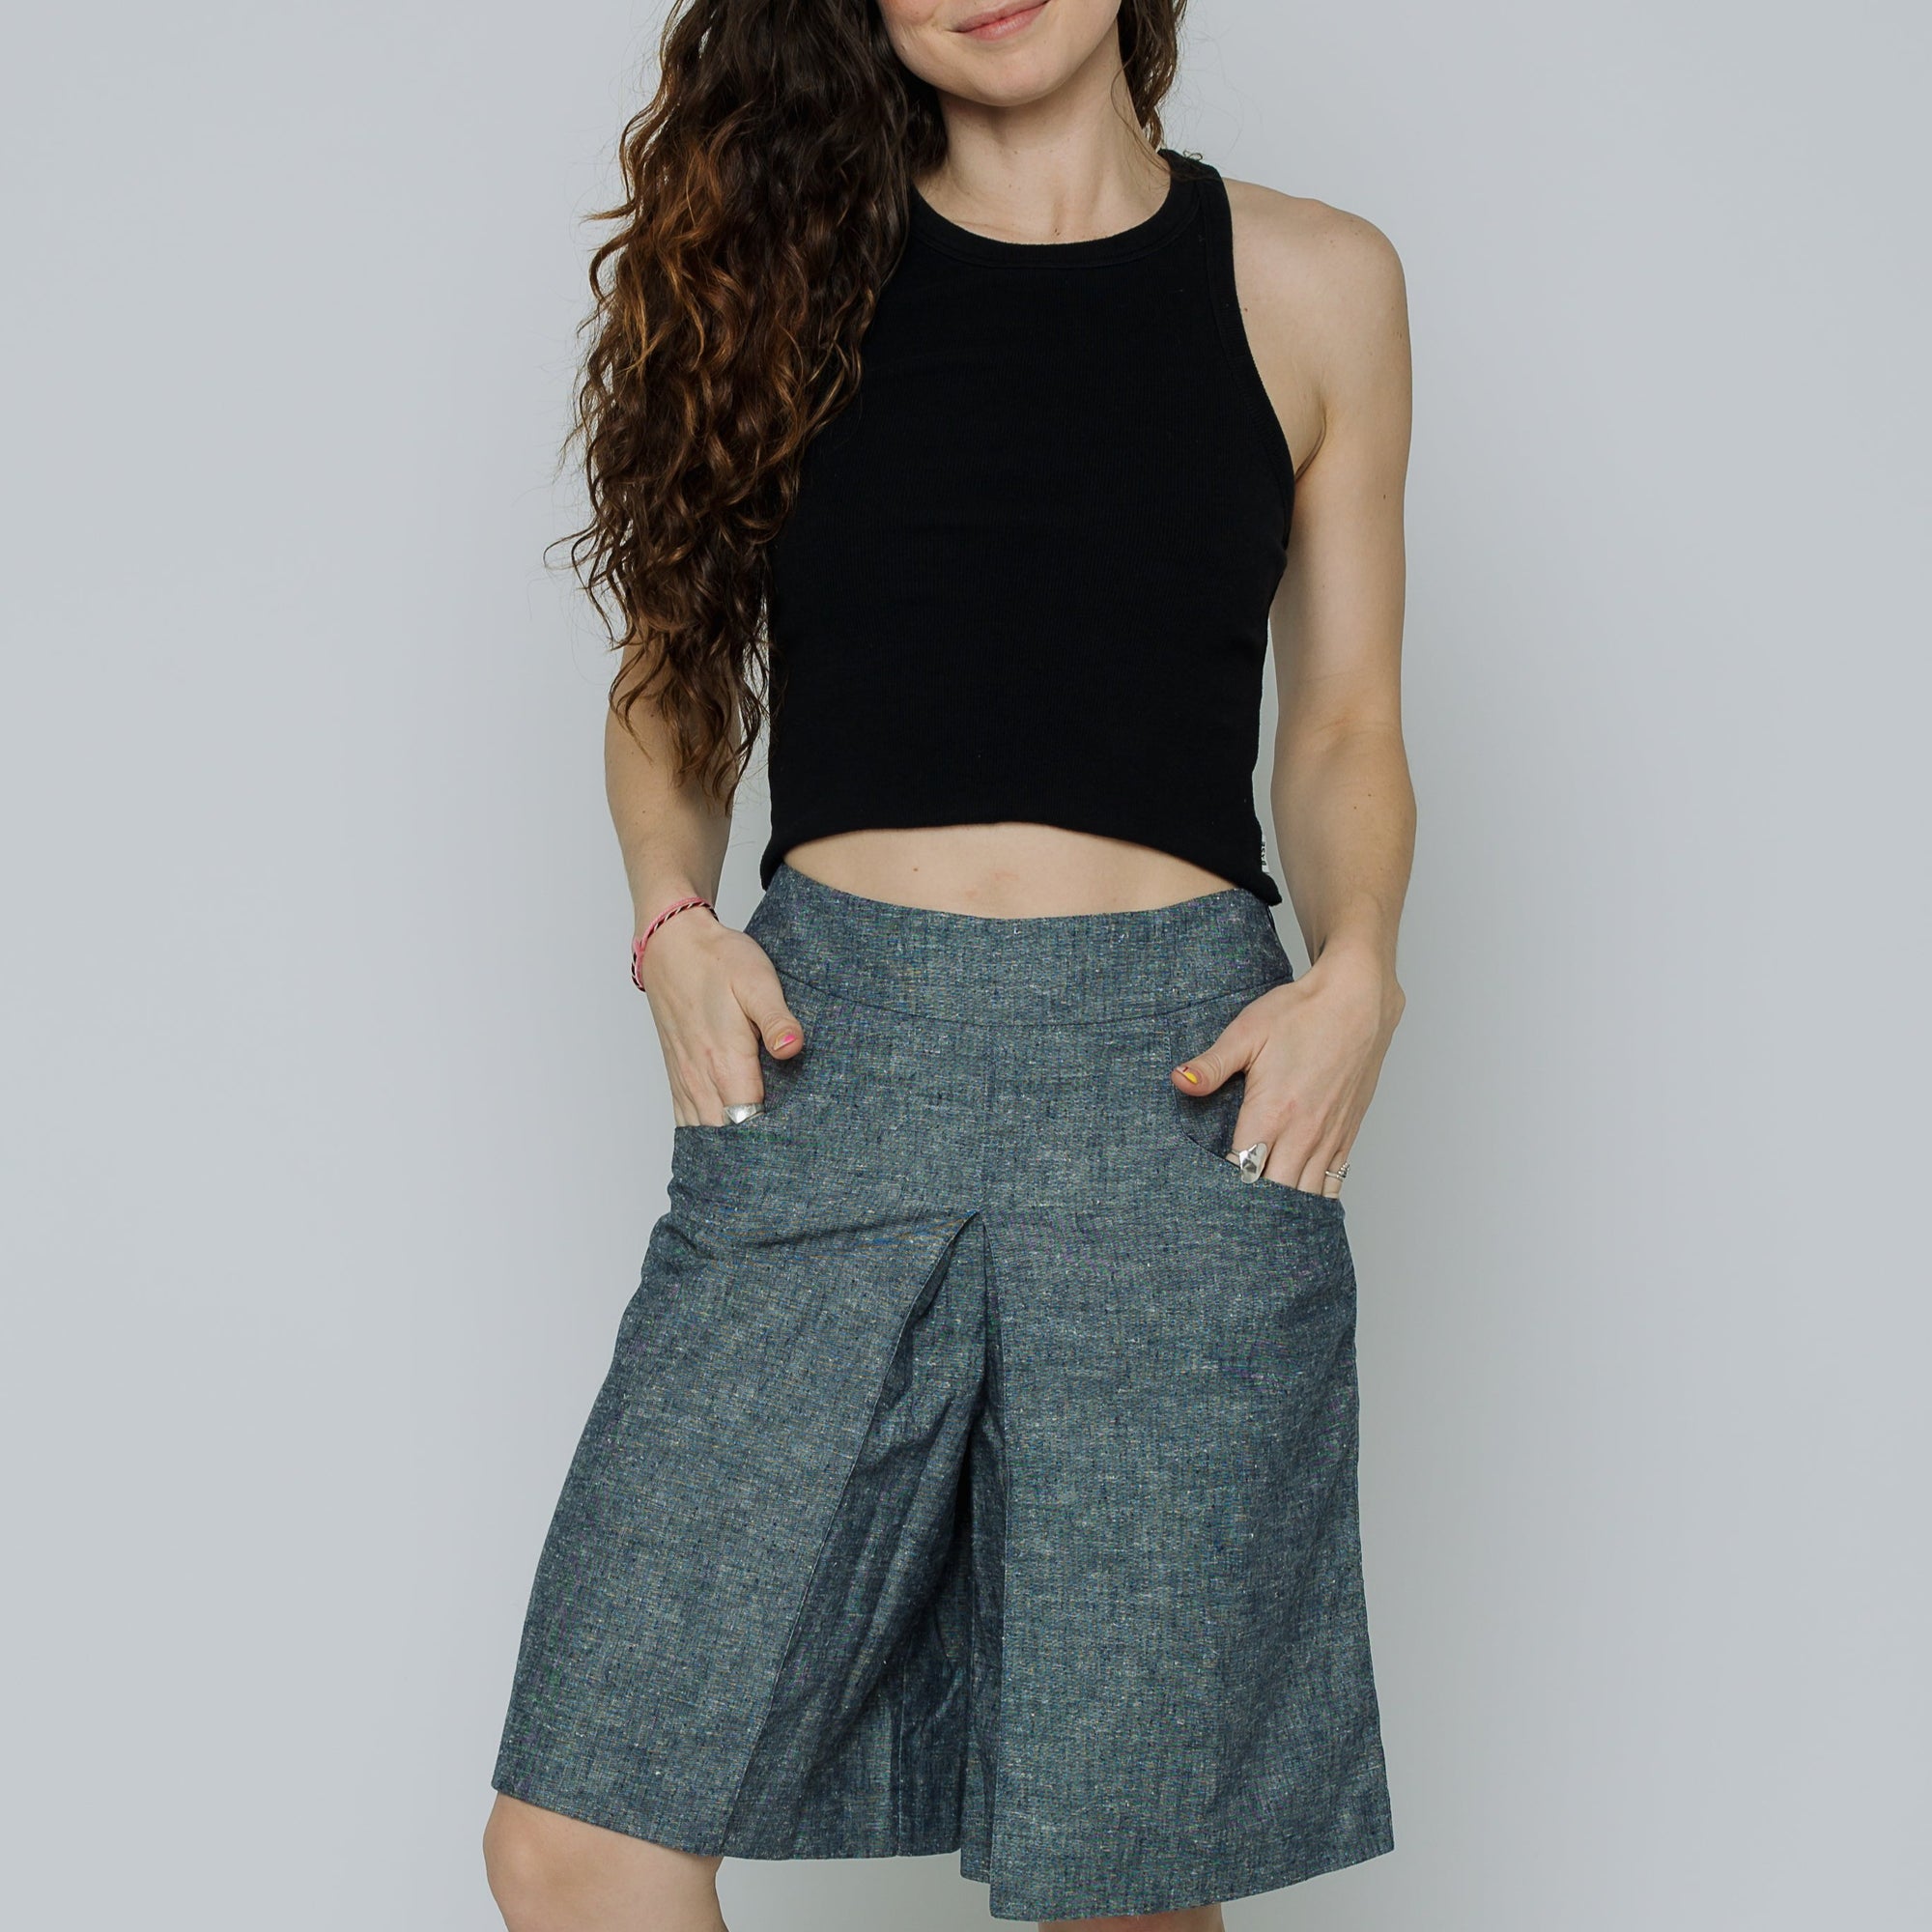 Hemp and Organic Cotton Women's Shorts, Lightweight Culottes